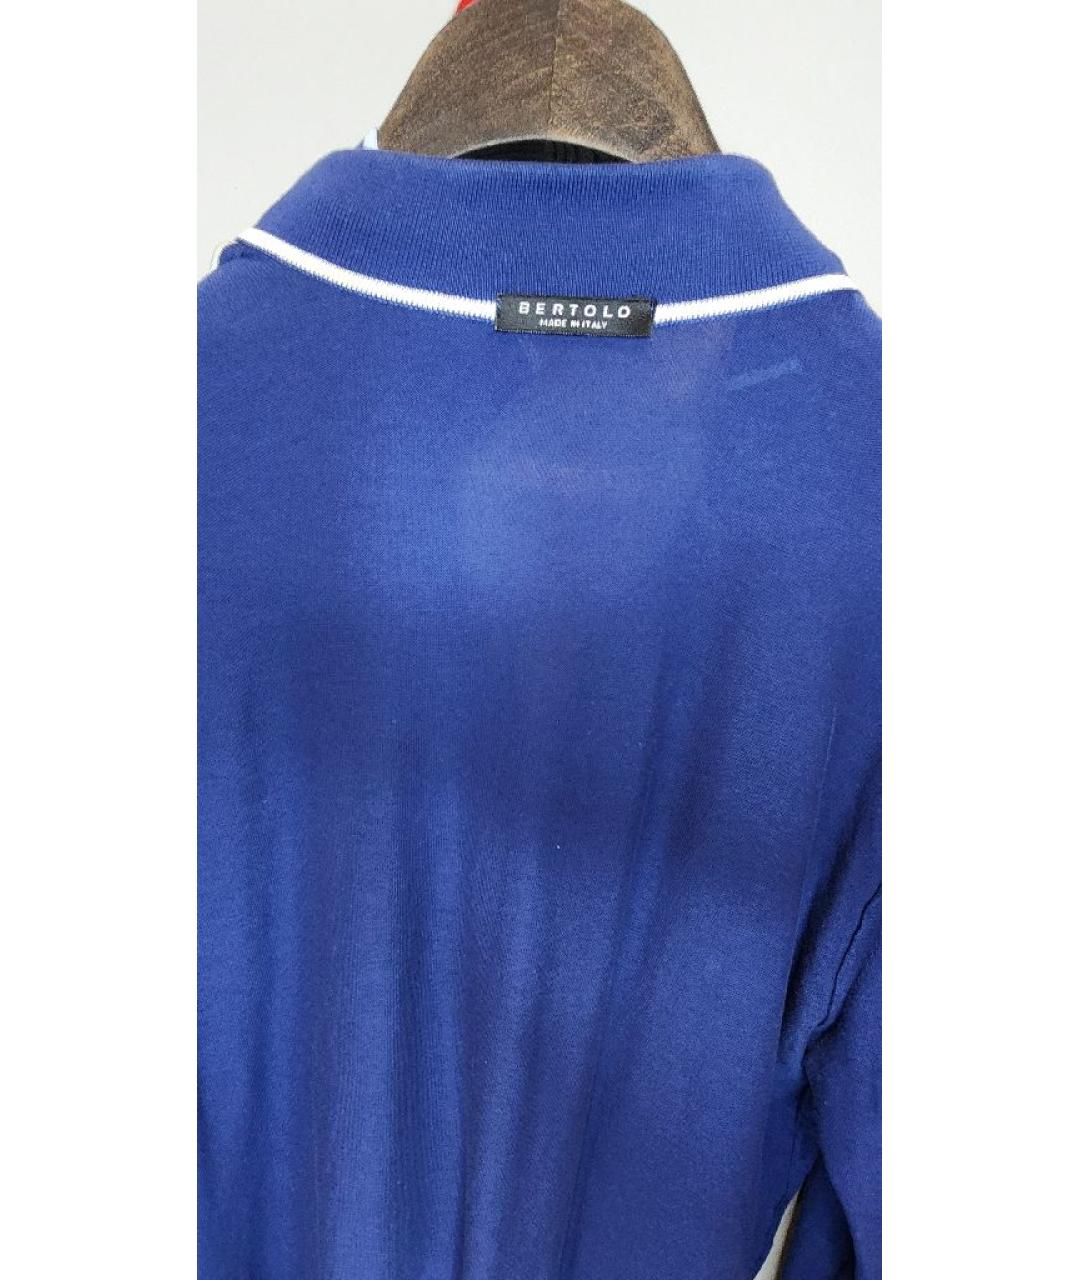 BERTOLO LUXURY MENSWEAR Темно-синий хлопковый джемпер / свитер, фото 3